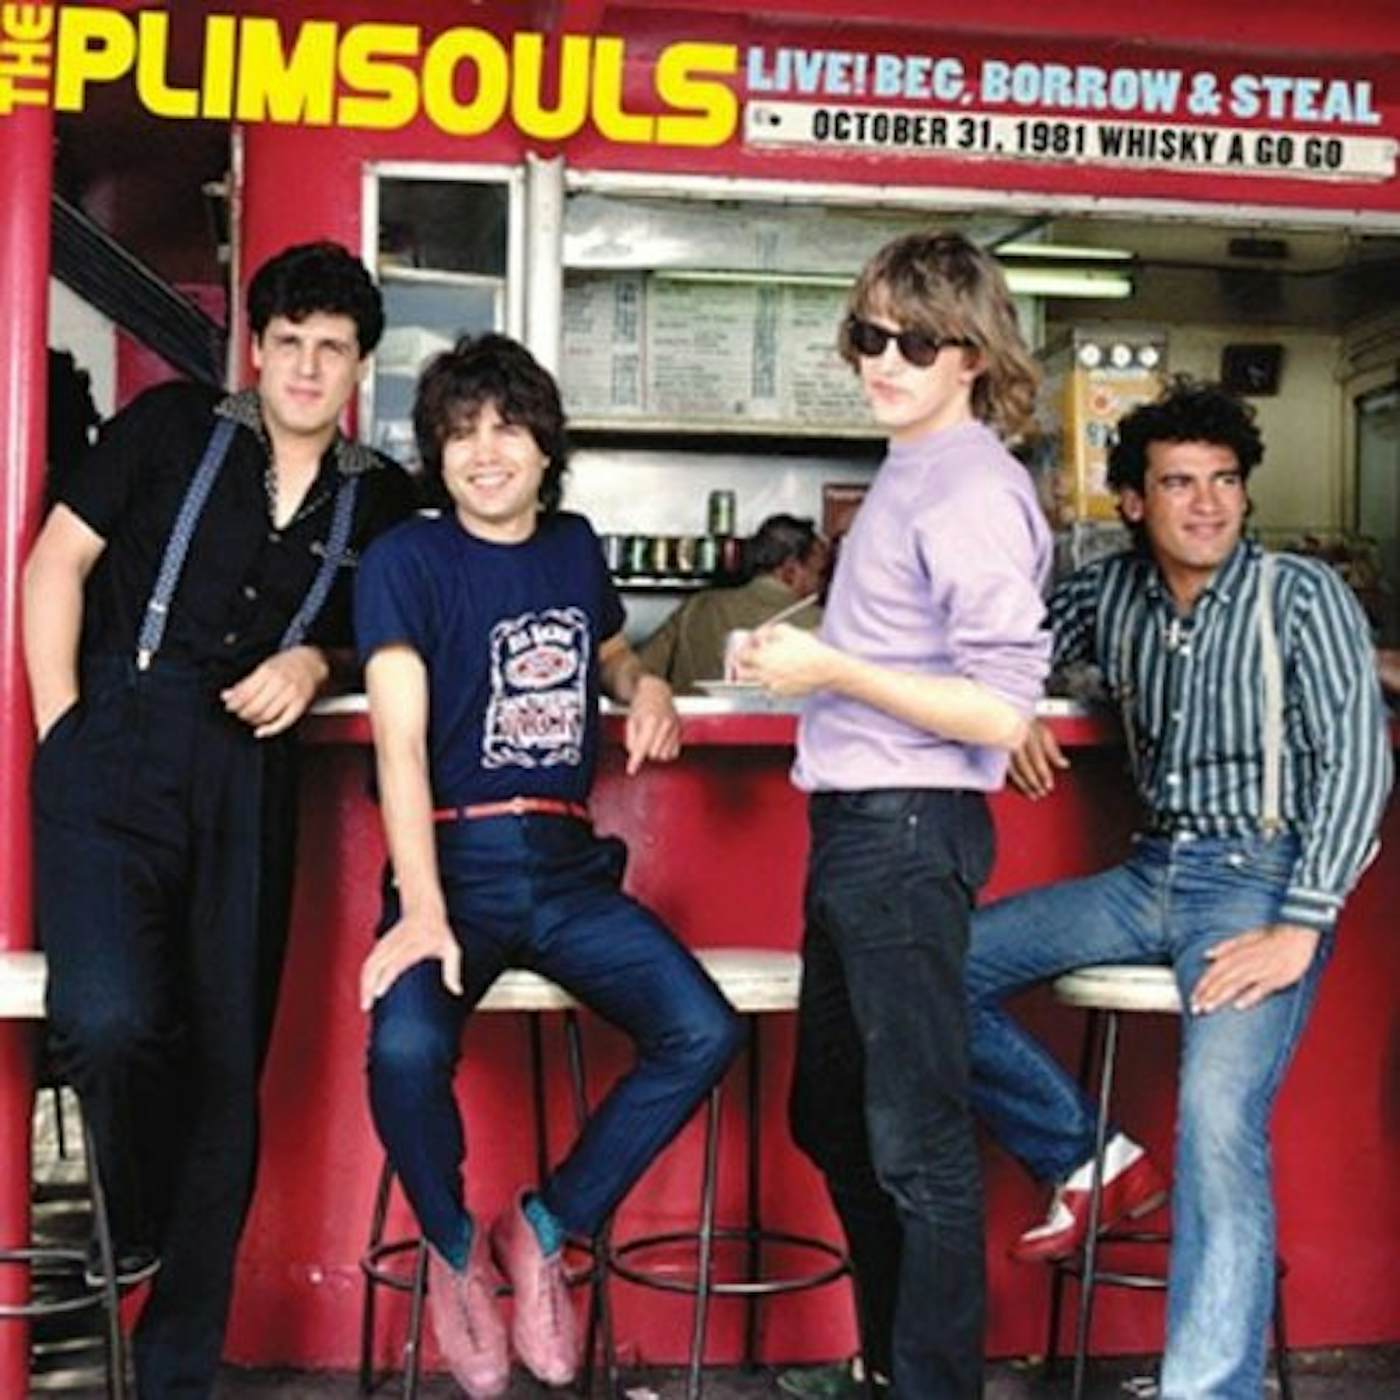 Plimsouls LIVE BEG BORROW & STEAL: OCTOBER 31 1981 WHISKEY Vinyl Record